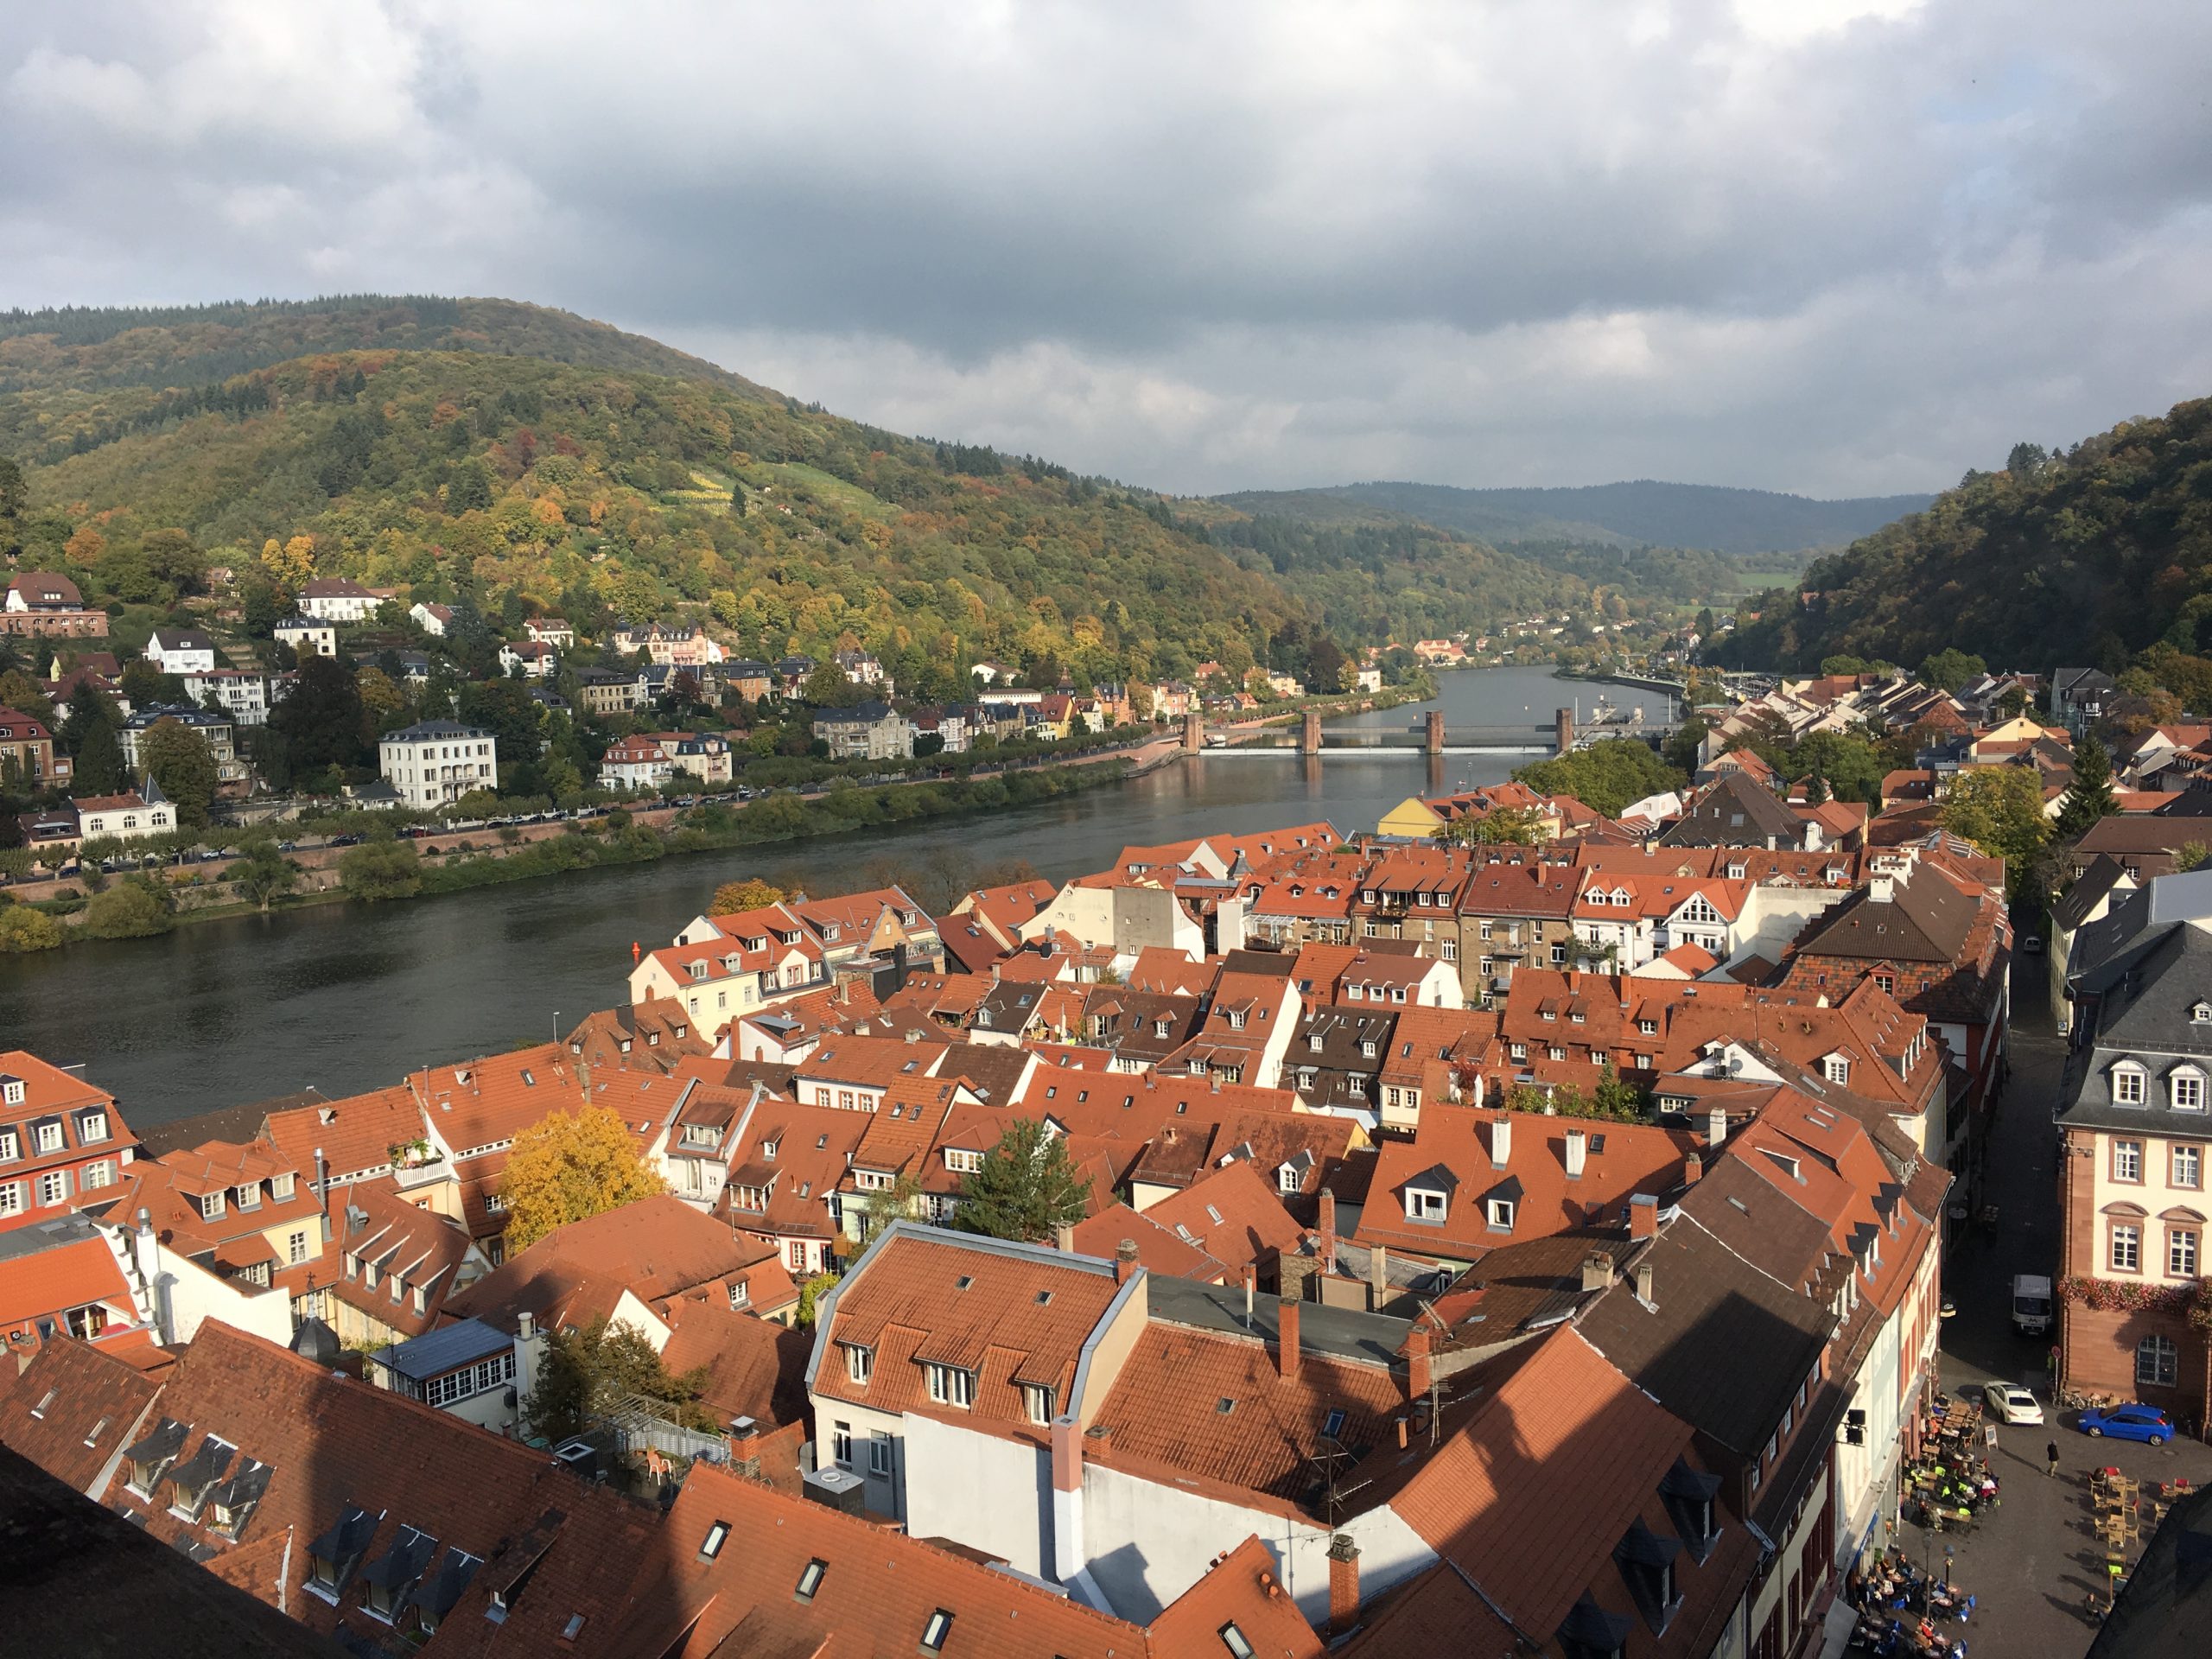 Old Heidelberg and the Nsckar River